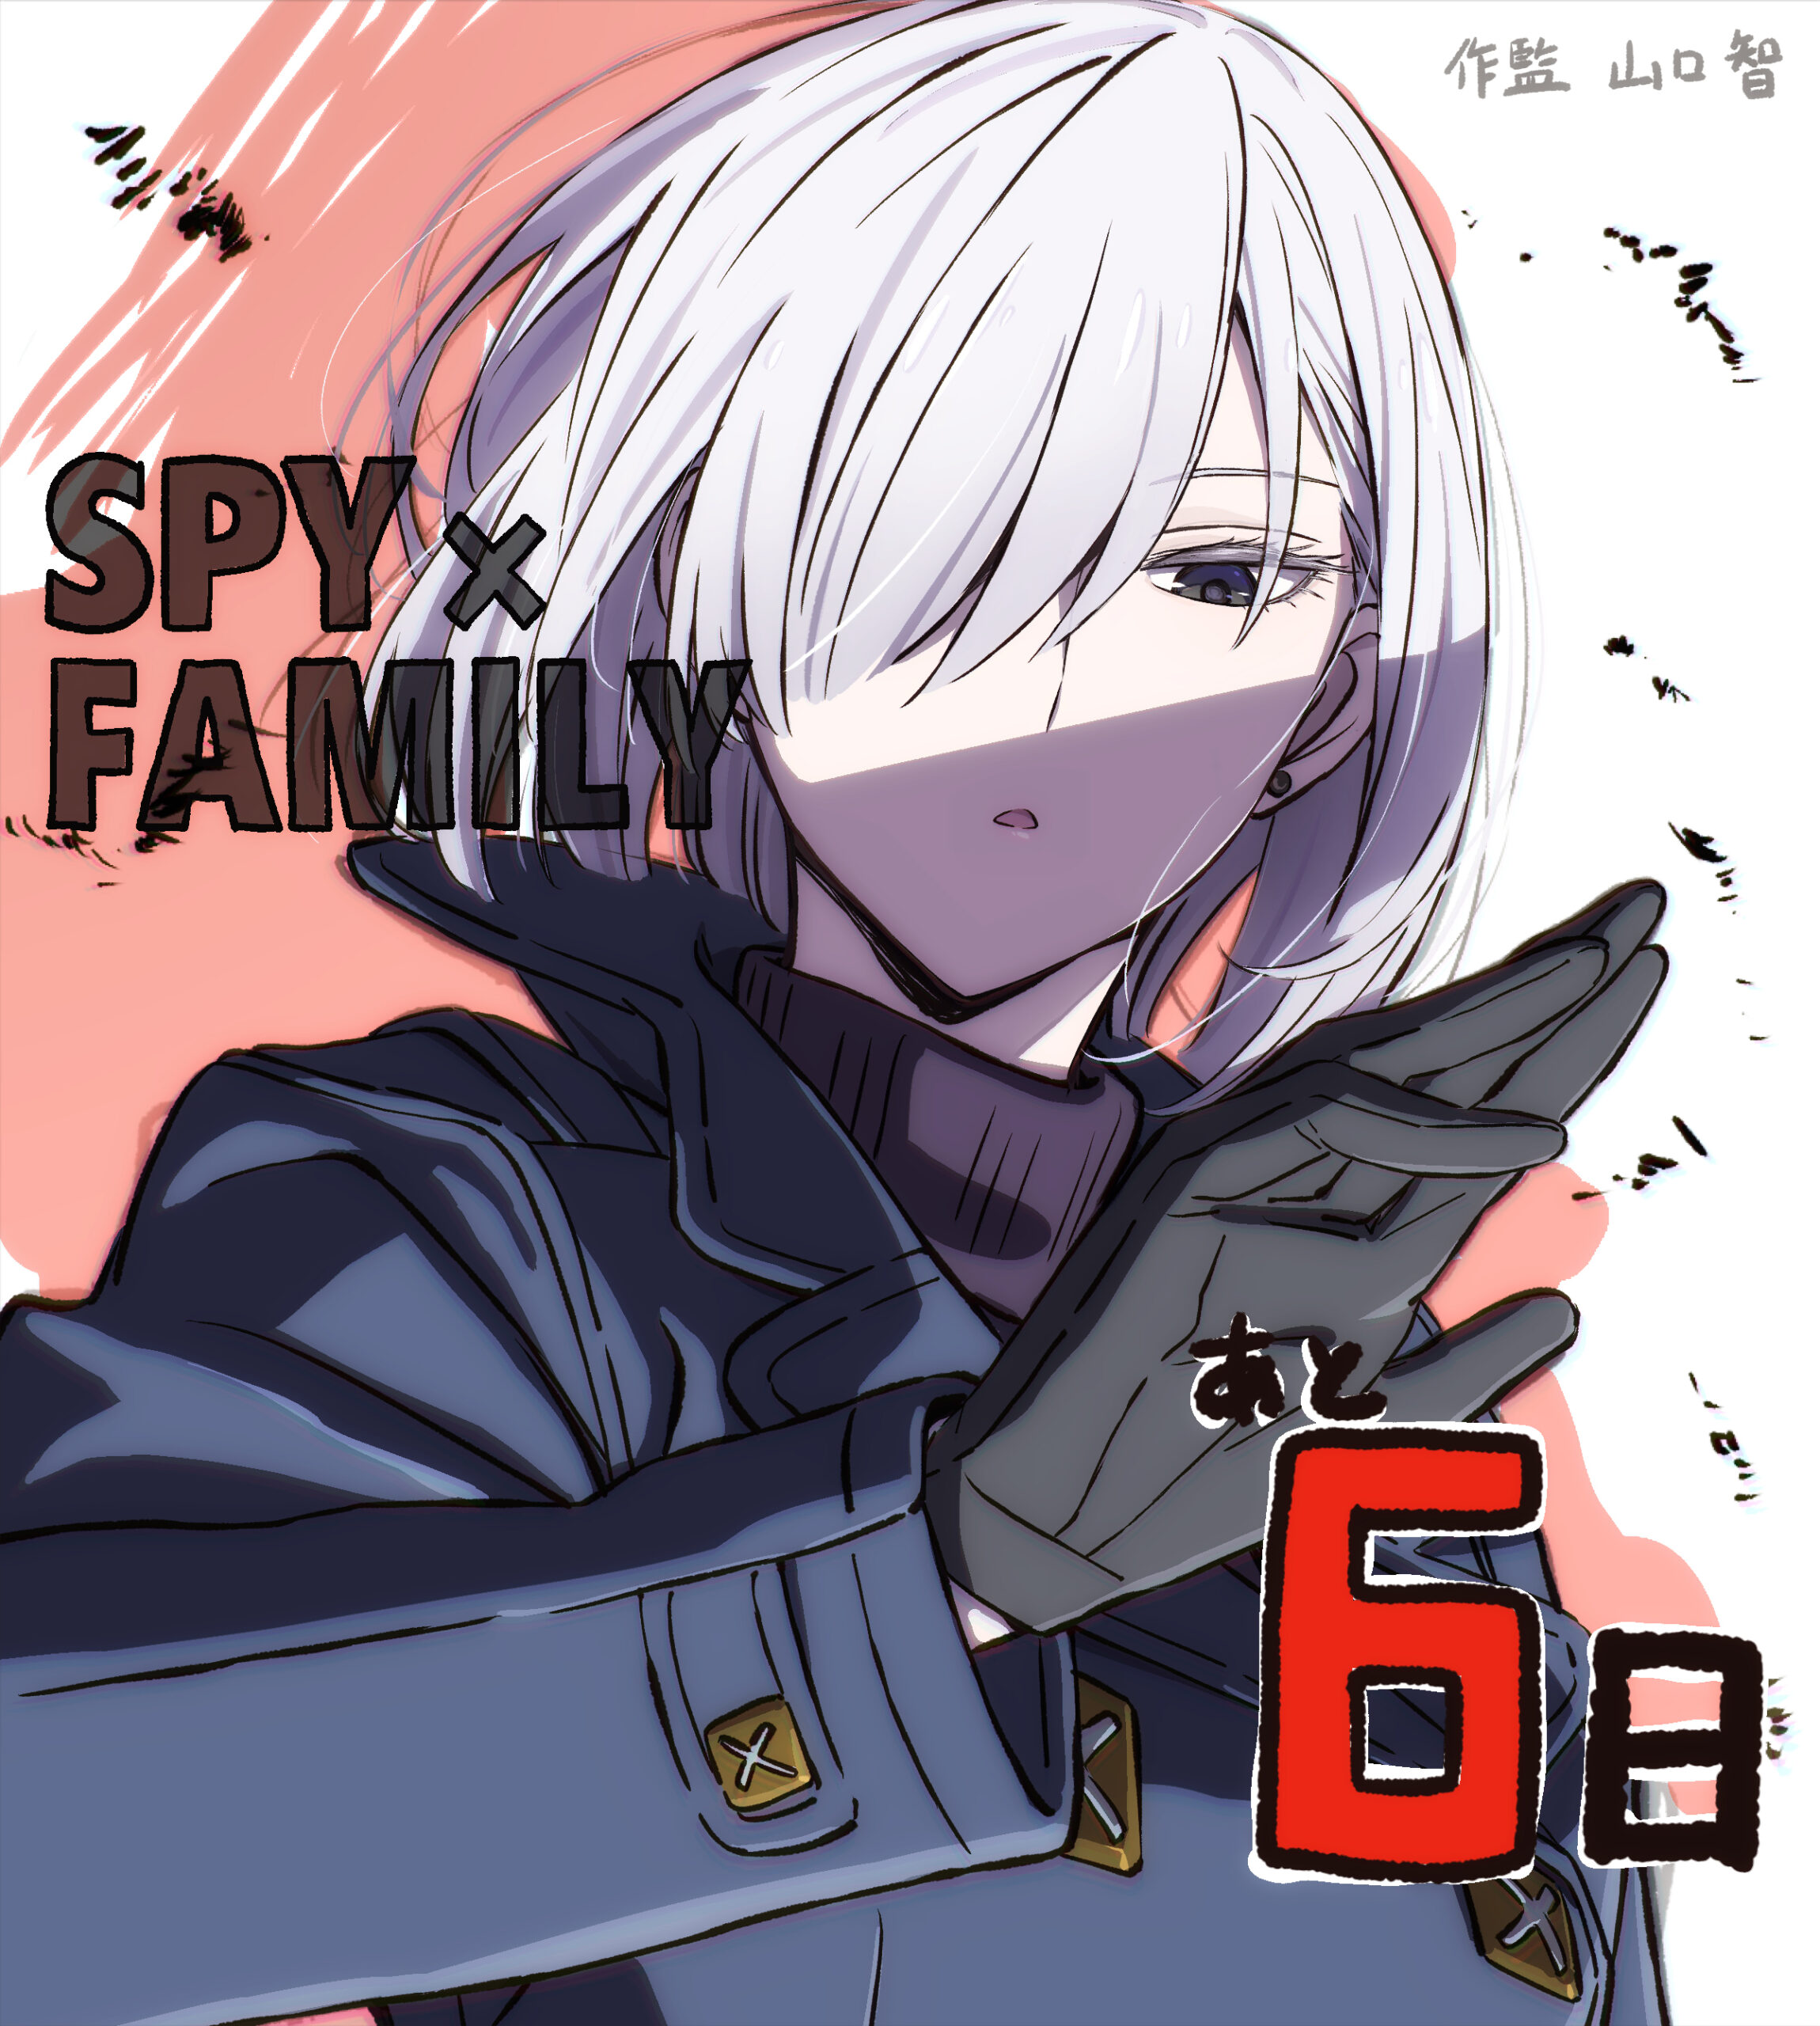 Spy x Family Anime Part 2 Countdown Introduces Fiona Frost - Anime Corner-demhanvico.com.vn